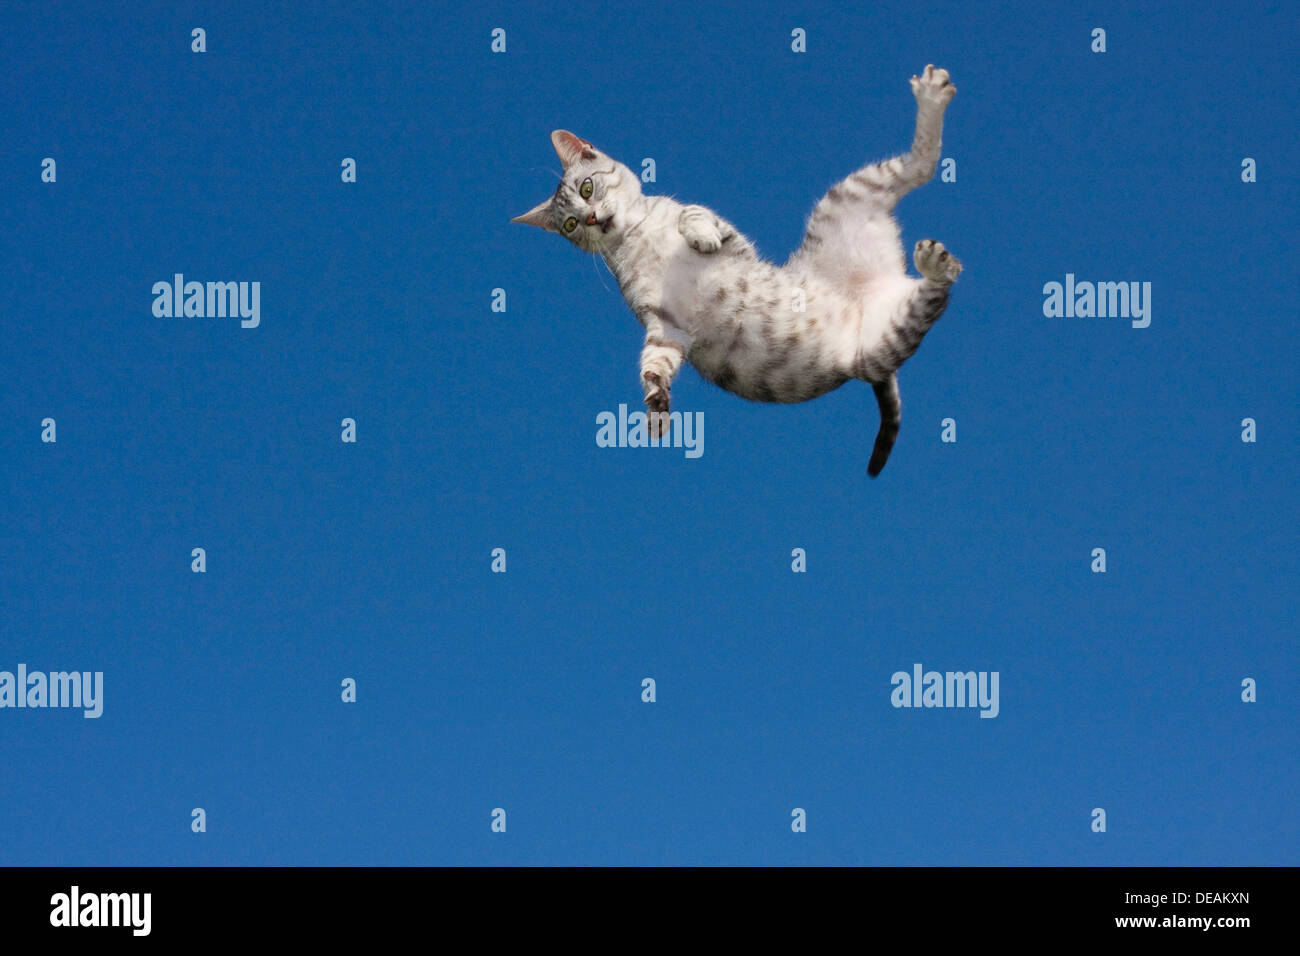 Flying cat Stock Photo